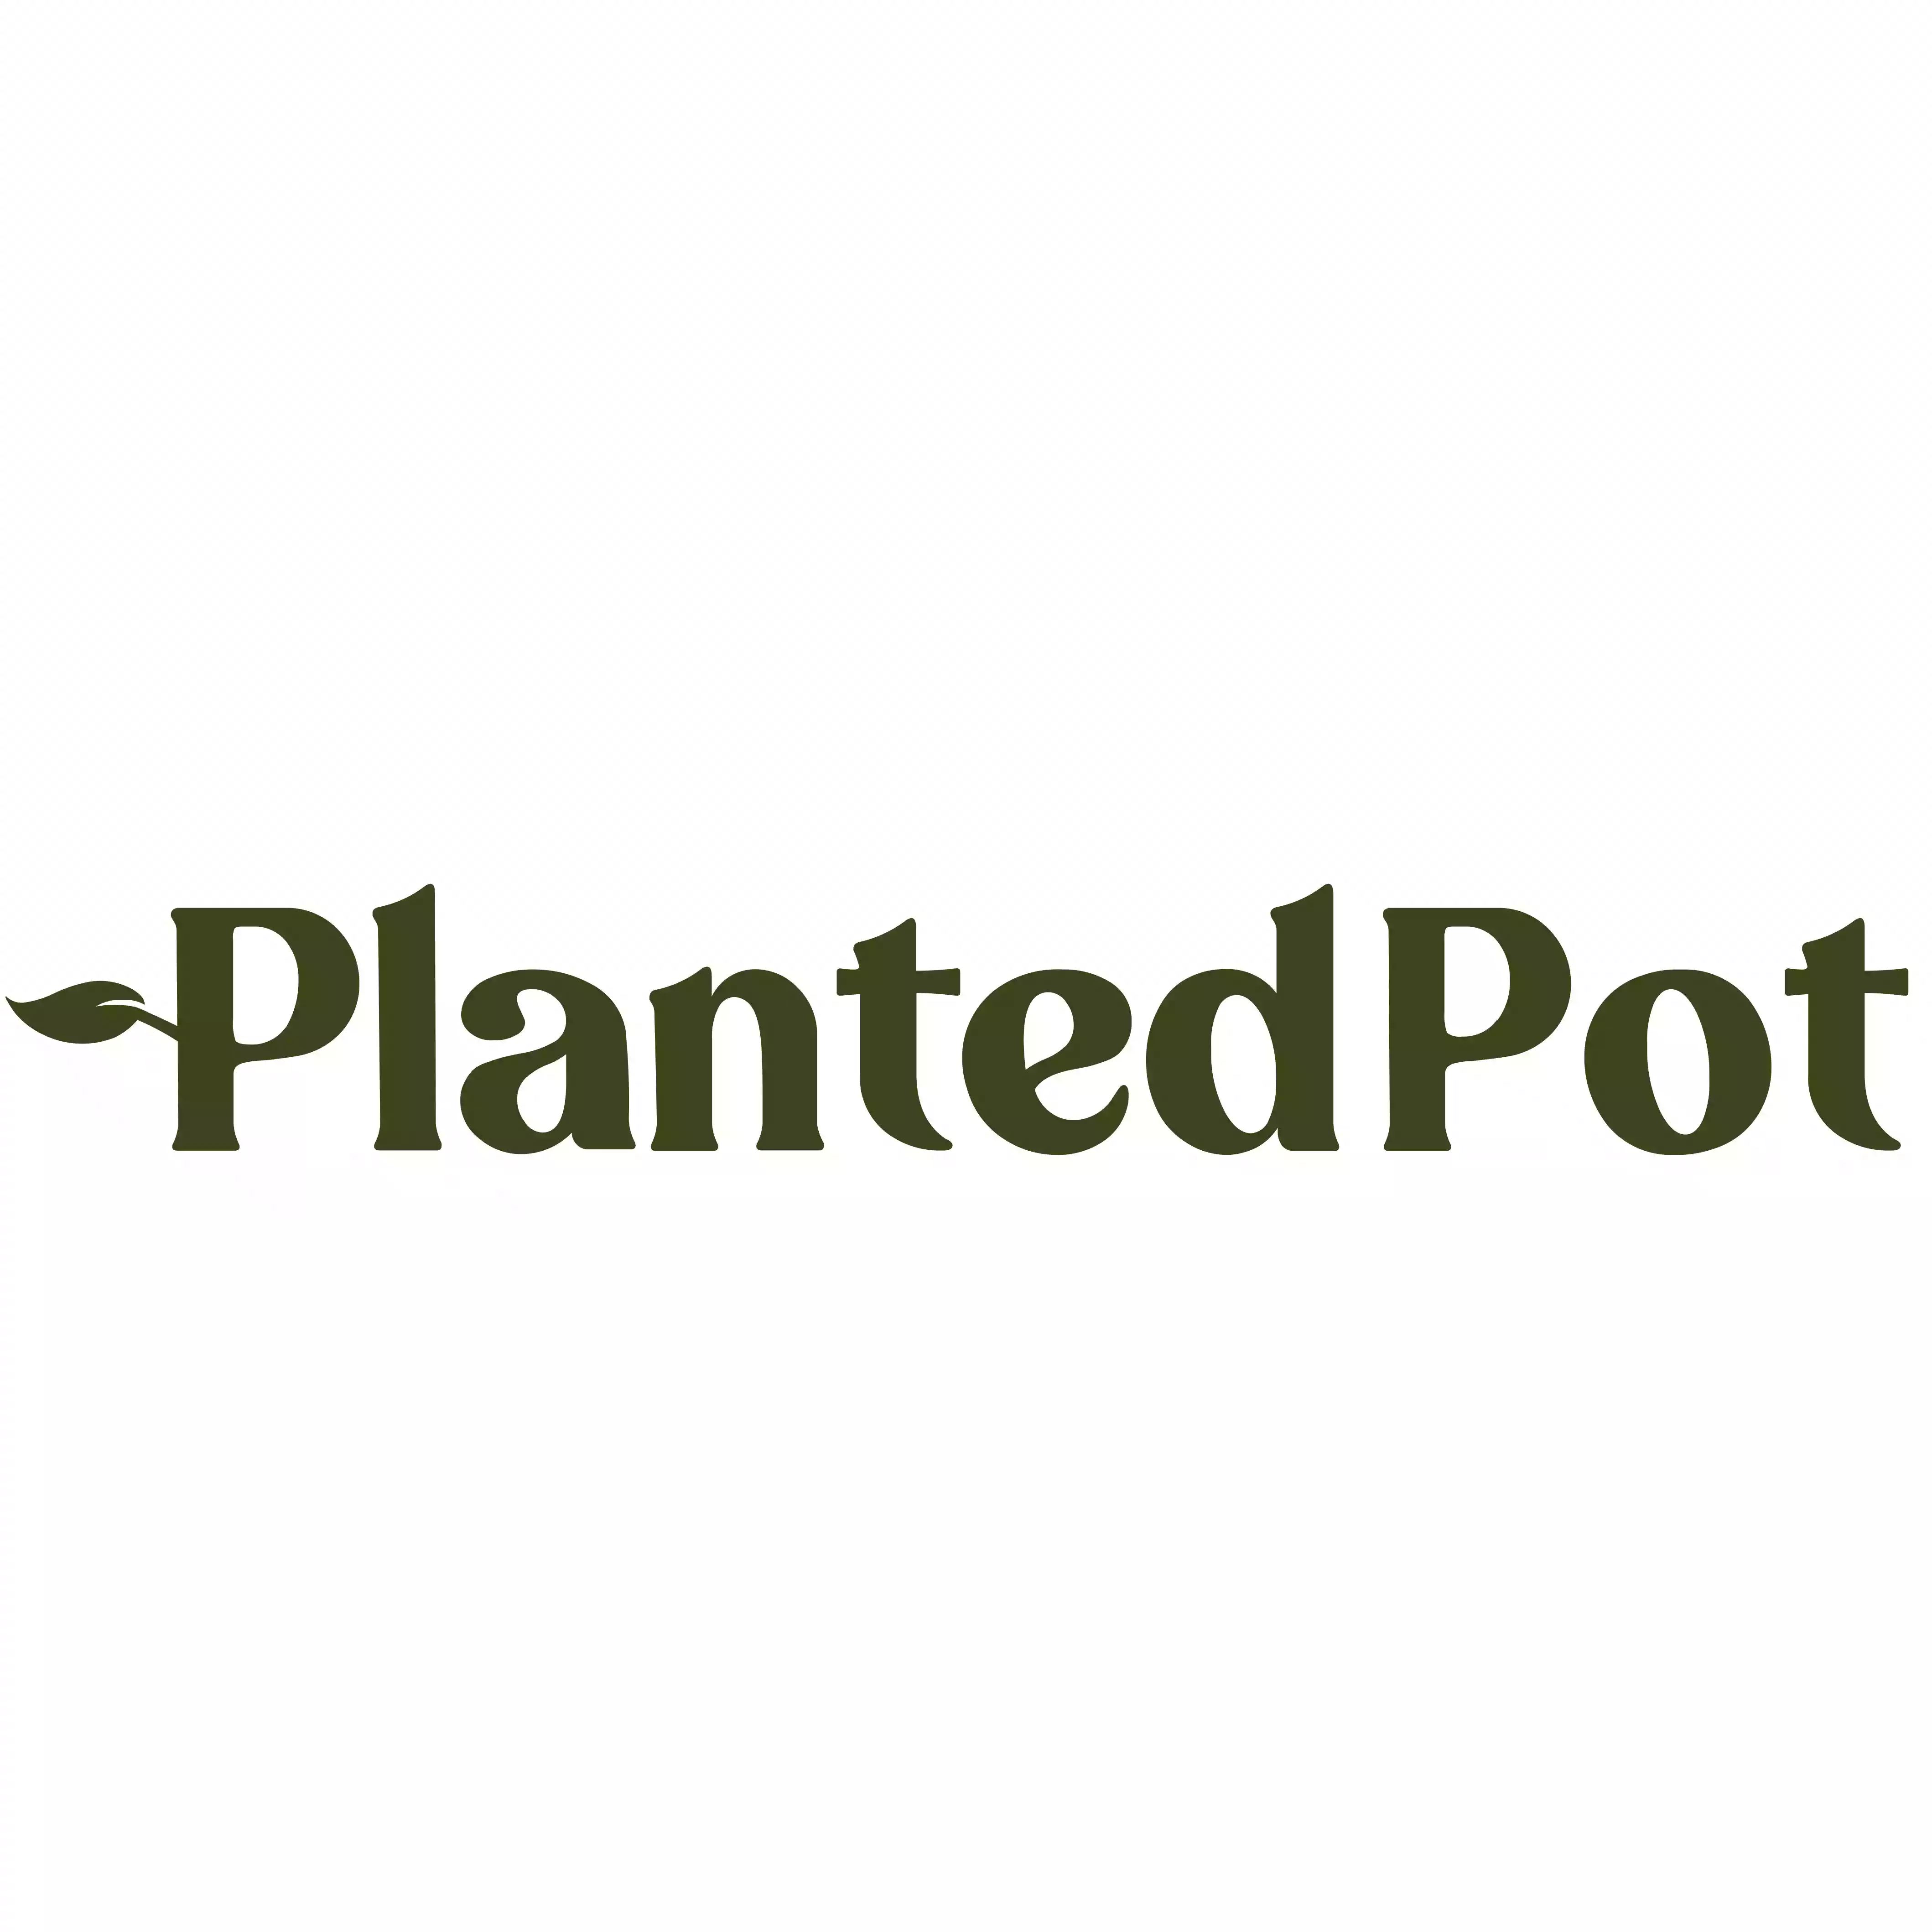 Planted Pot